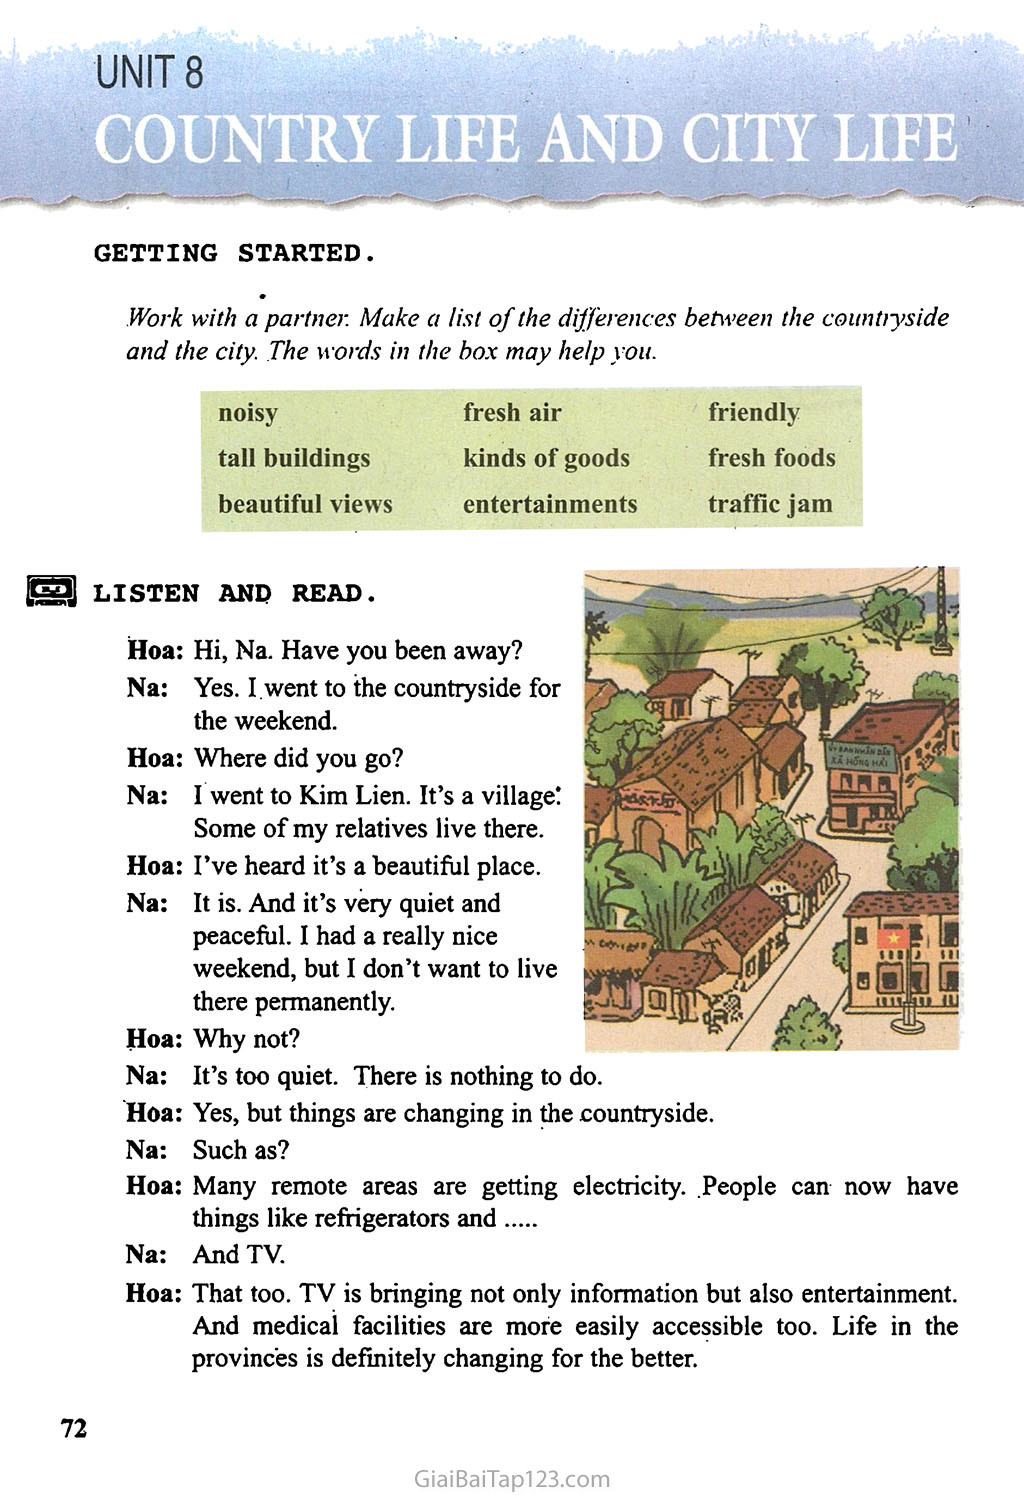 Unit 8: Country life and city life trang 1